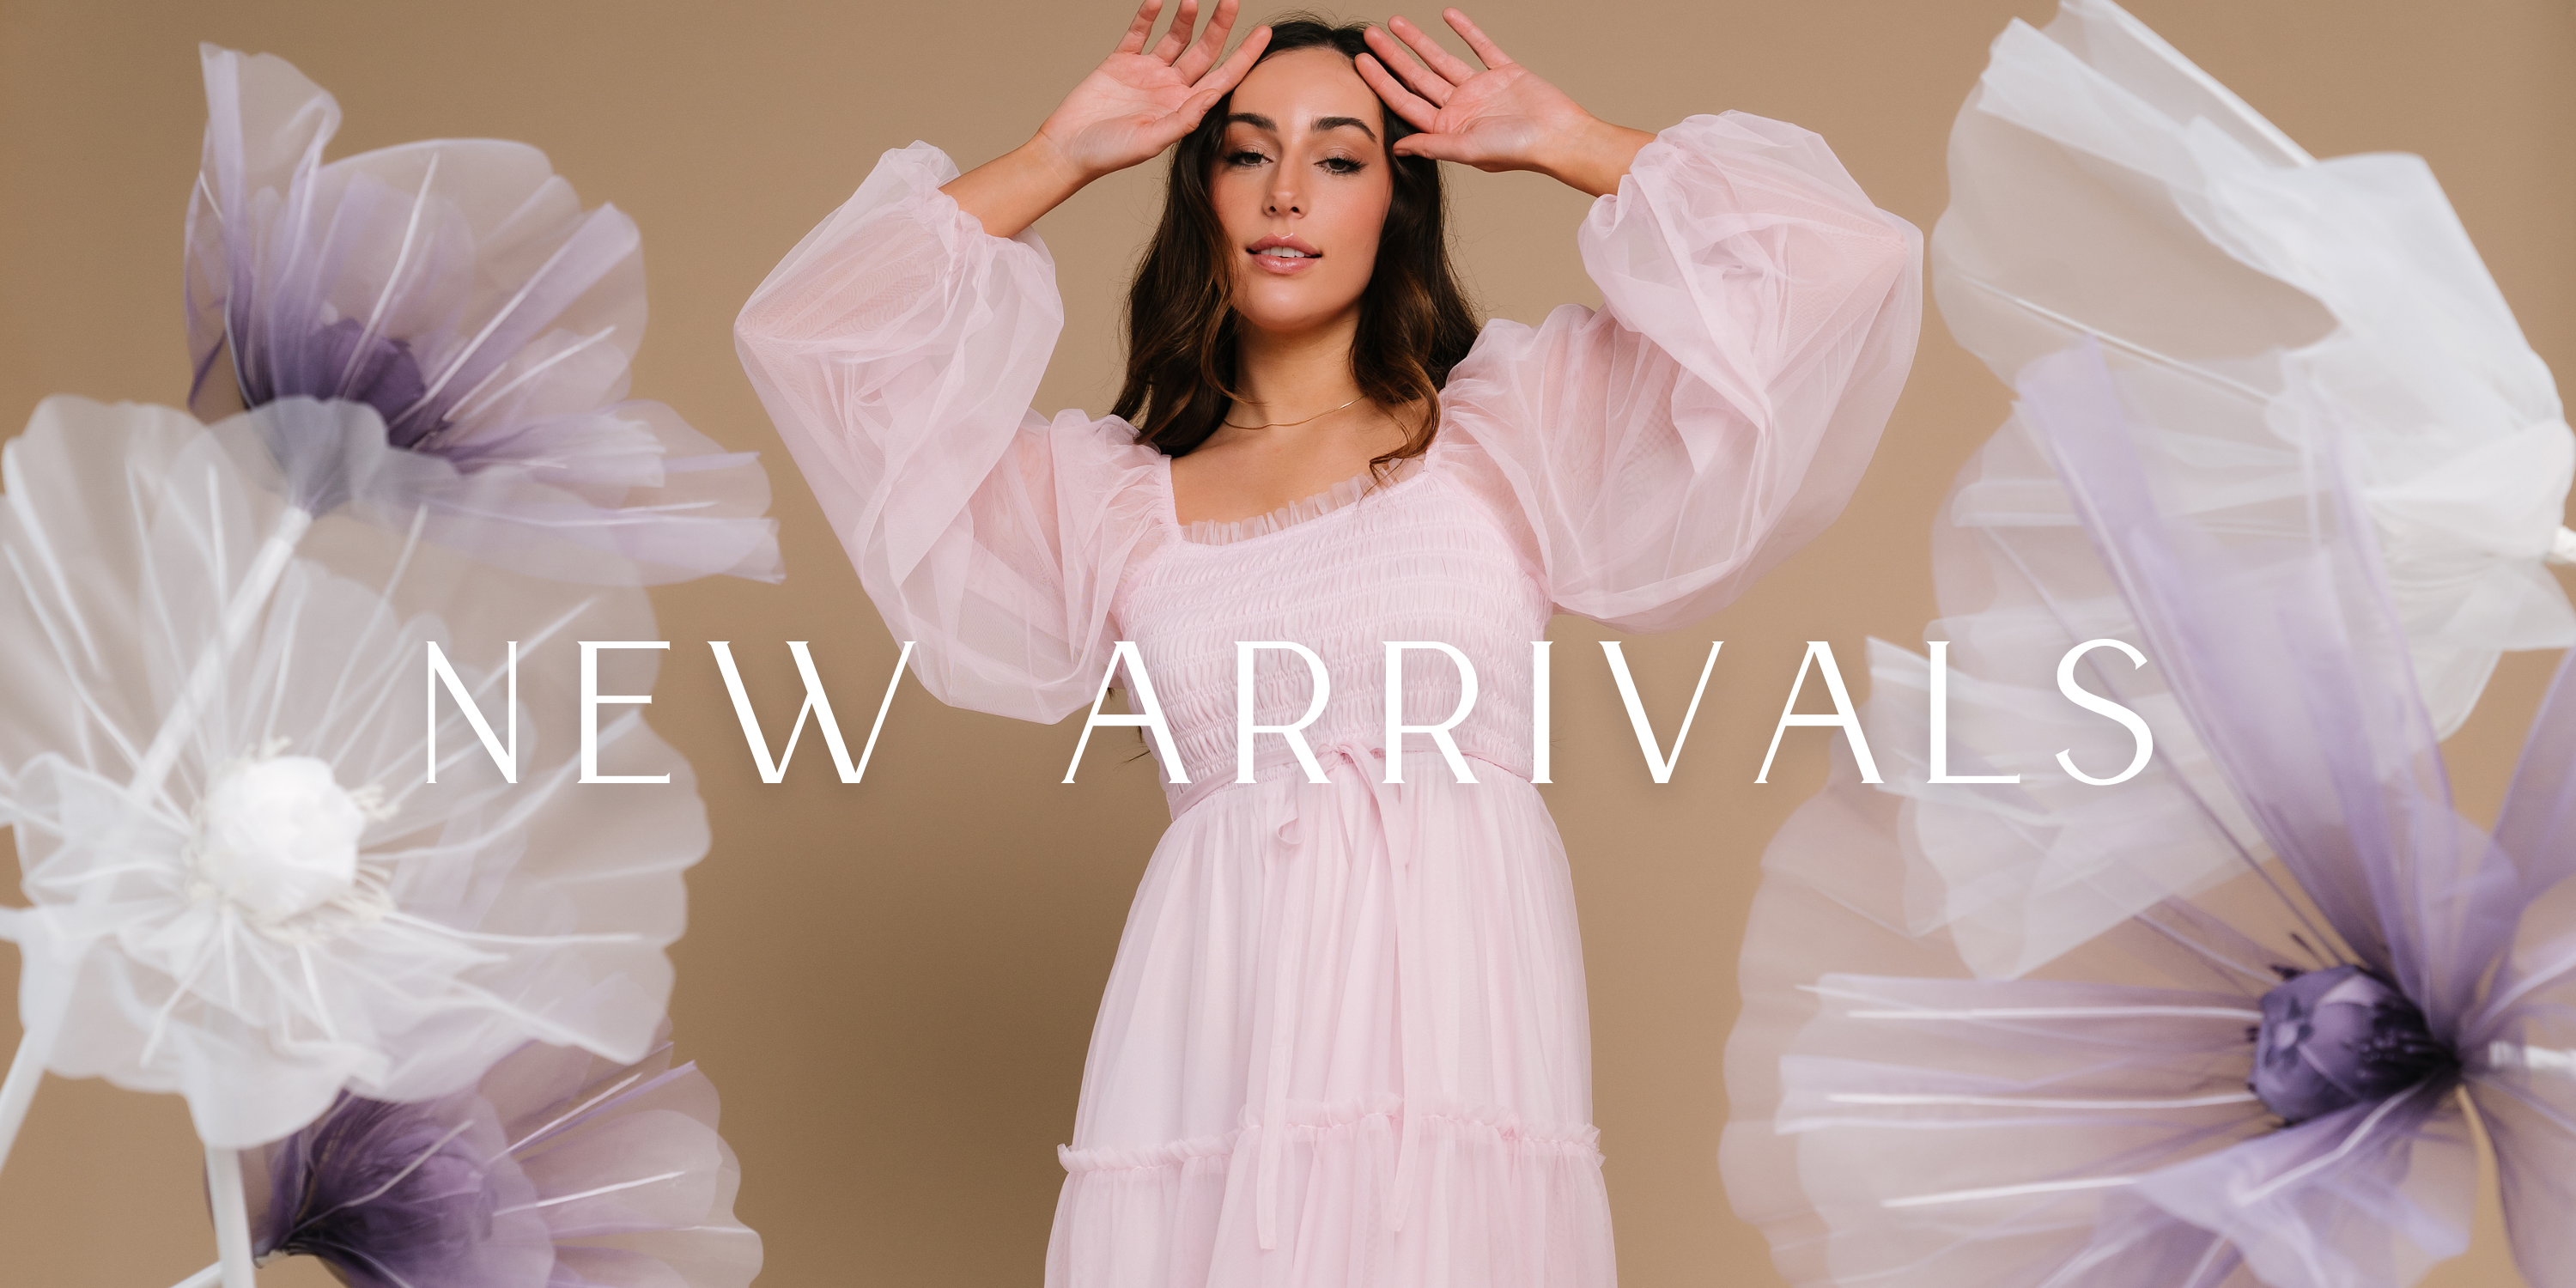 New Arrivals – Born Clothing